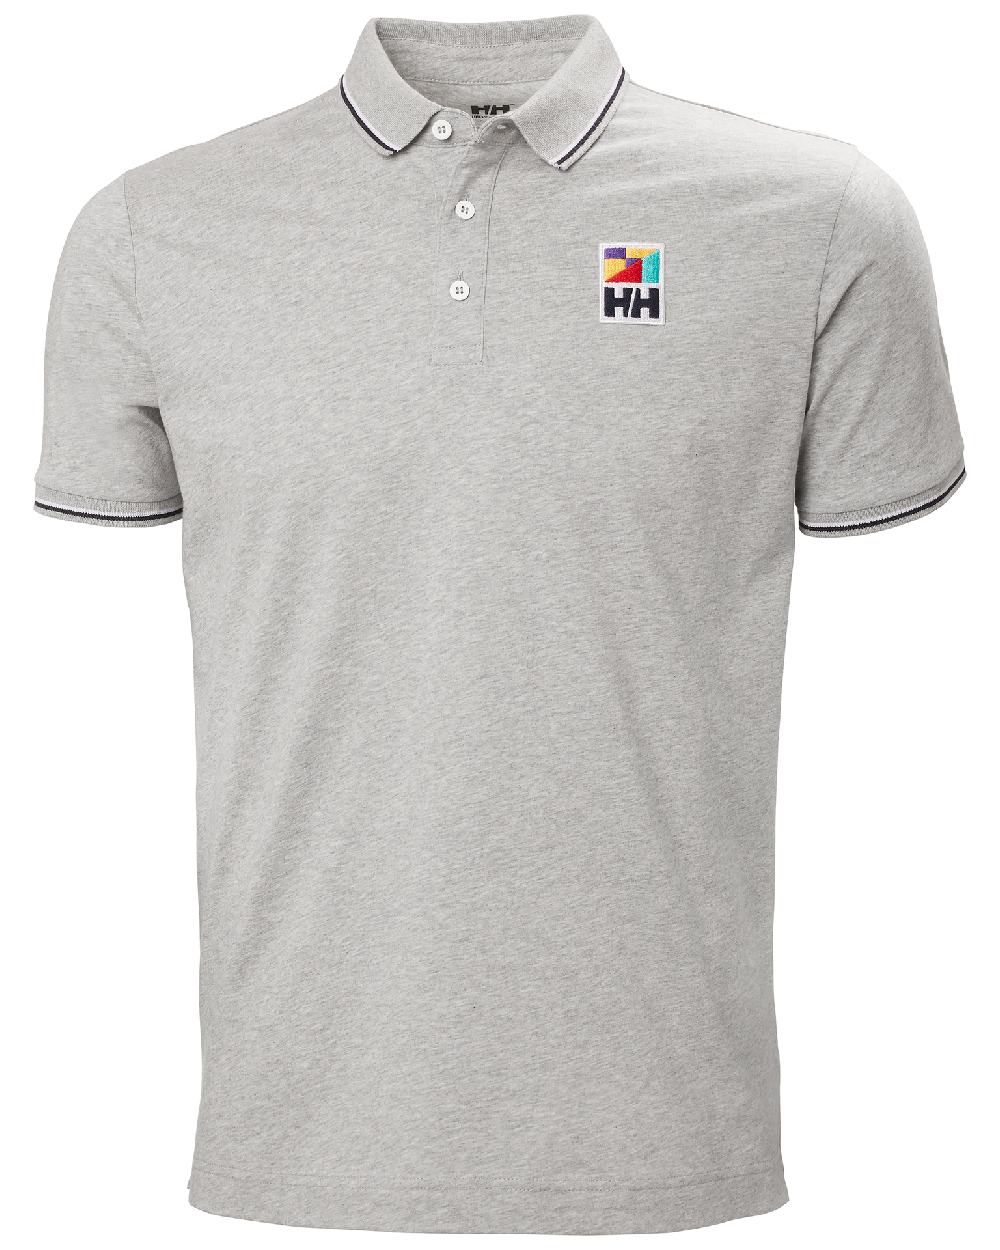 Grey Melange coloured Helly Hansen Mens Jersey Polo Shirt on white background 